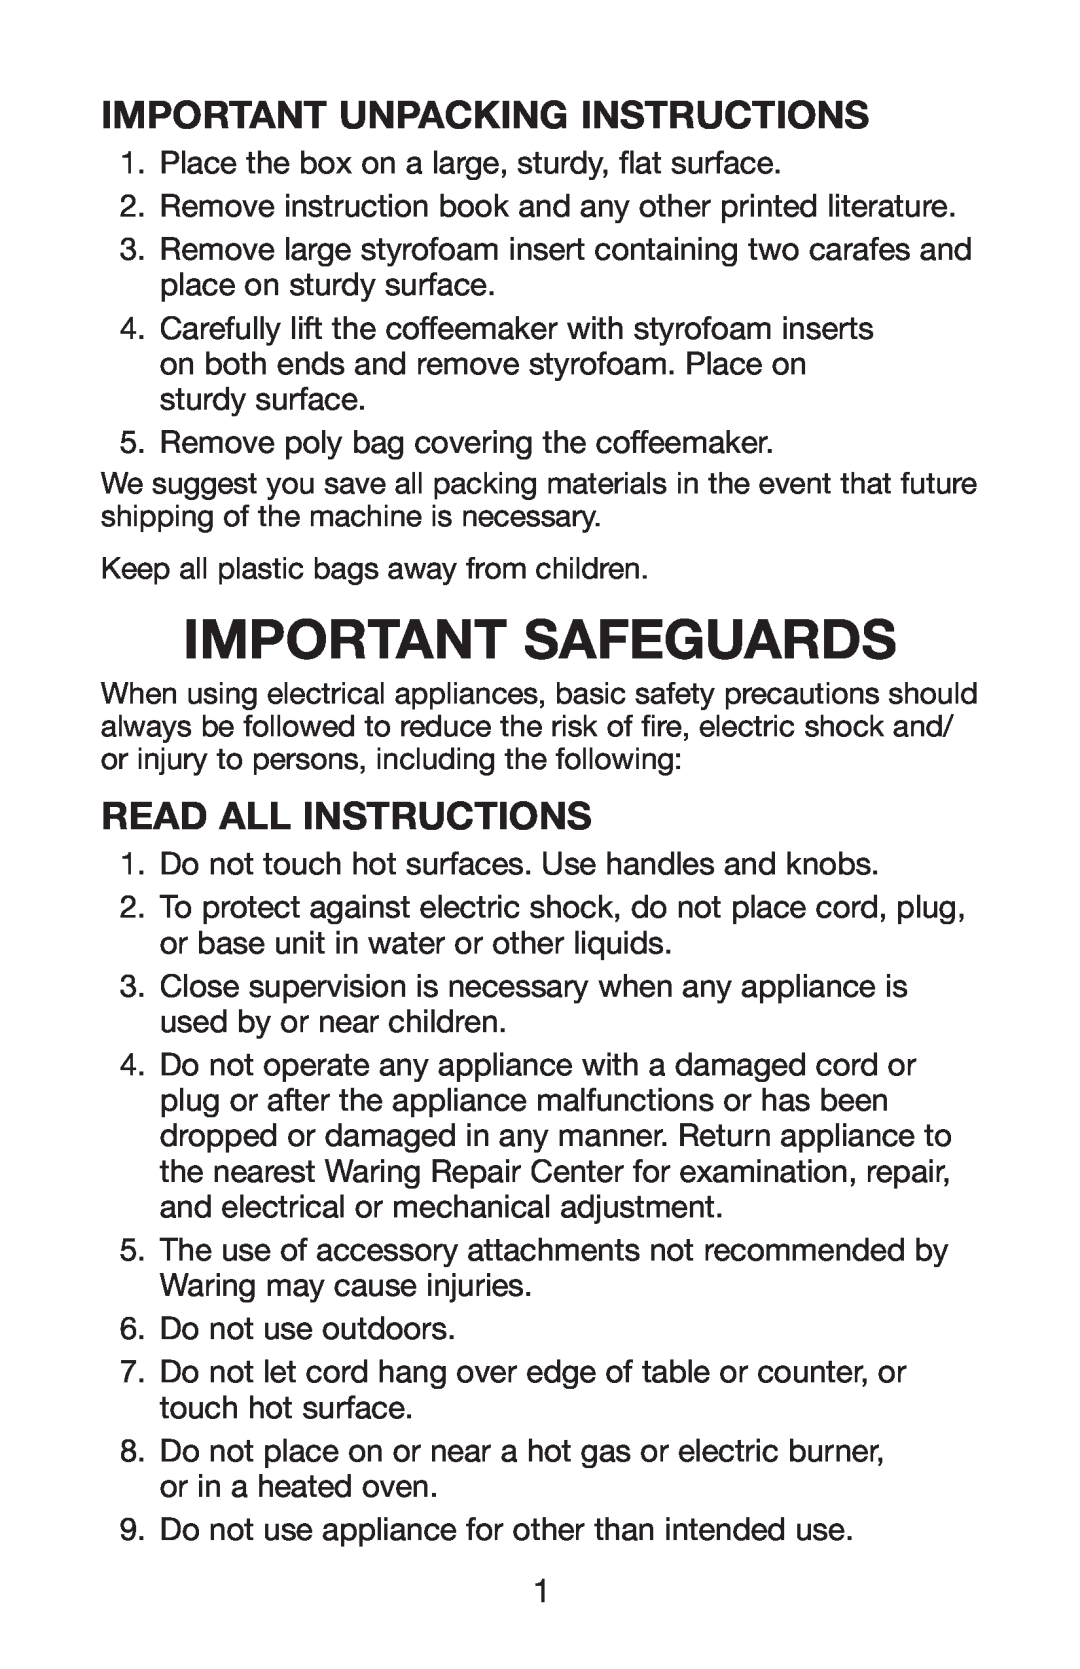 Waring WC1000 manual Important Unpacking Instructions, Read All Instructions, Important Safeguards 